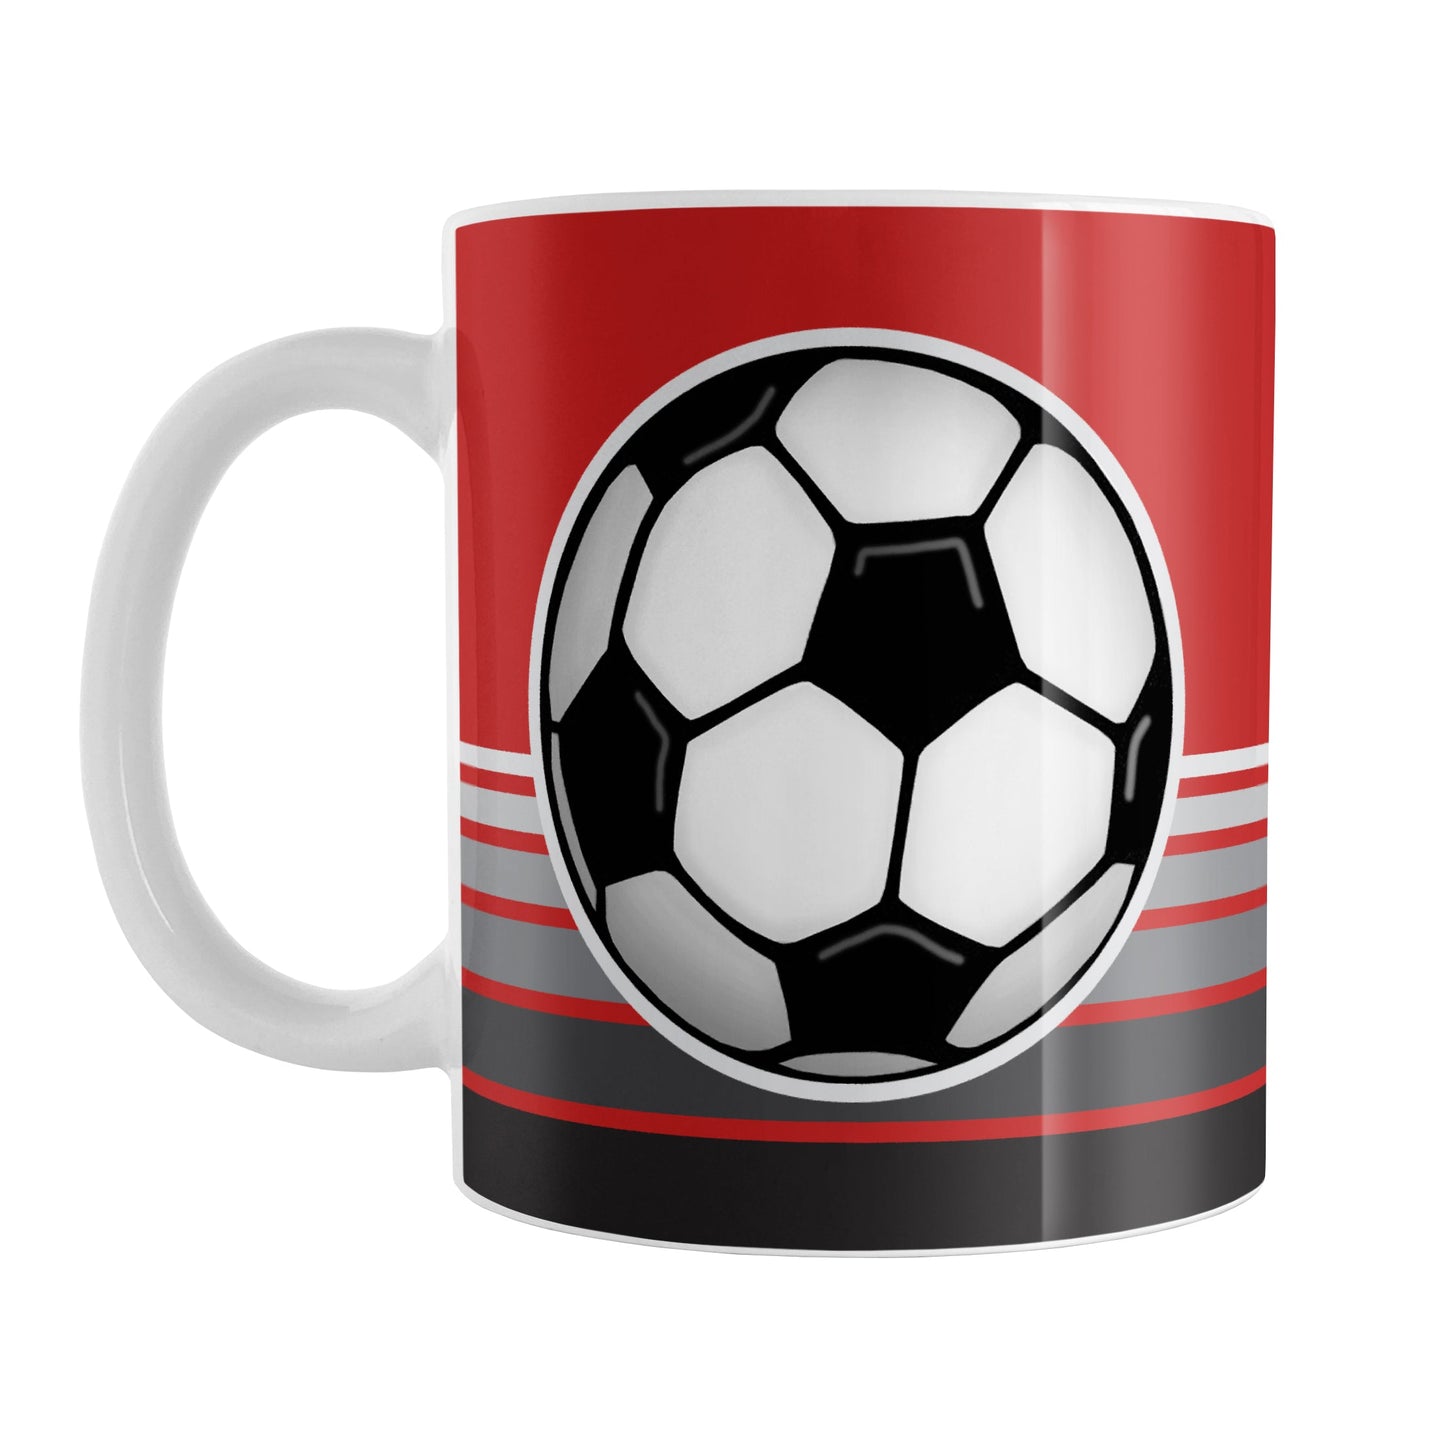 Gray Gradient Lined Red Soccer Ball Mug (11oz) at Amy's Coffee Mugs